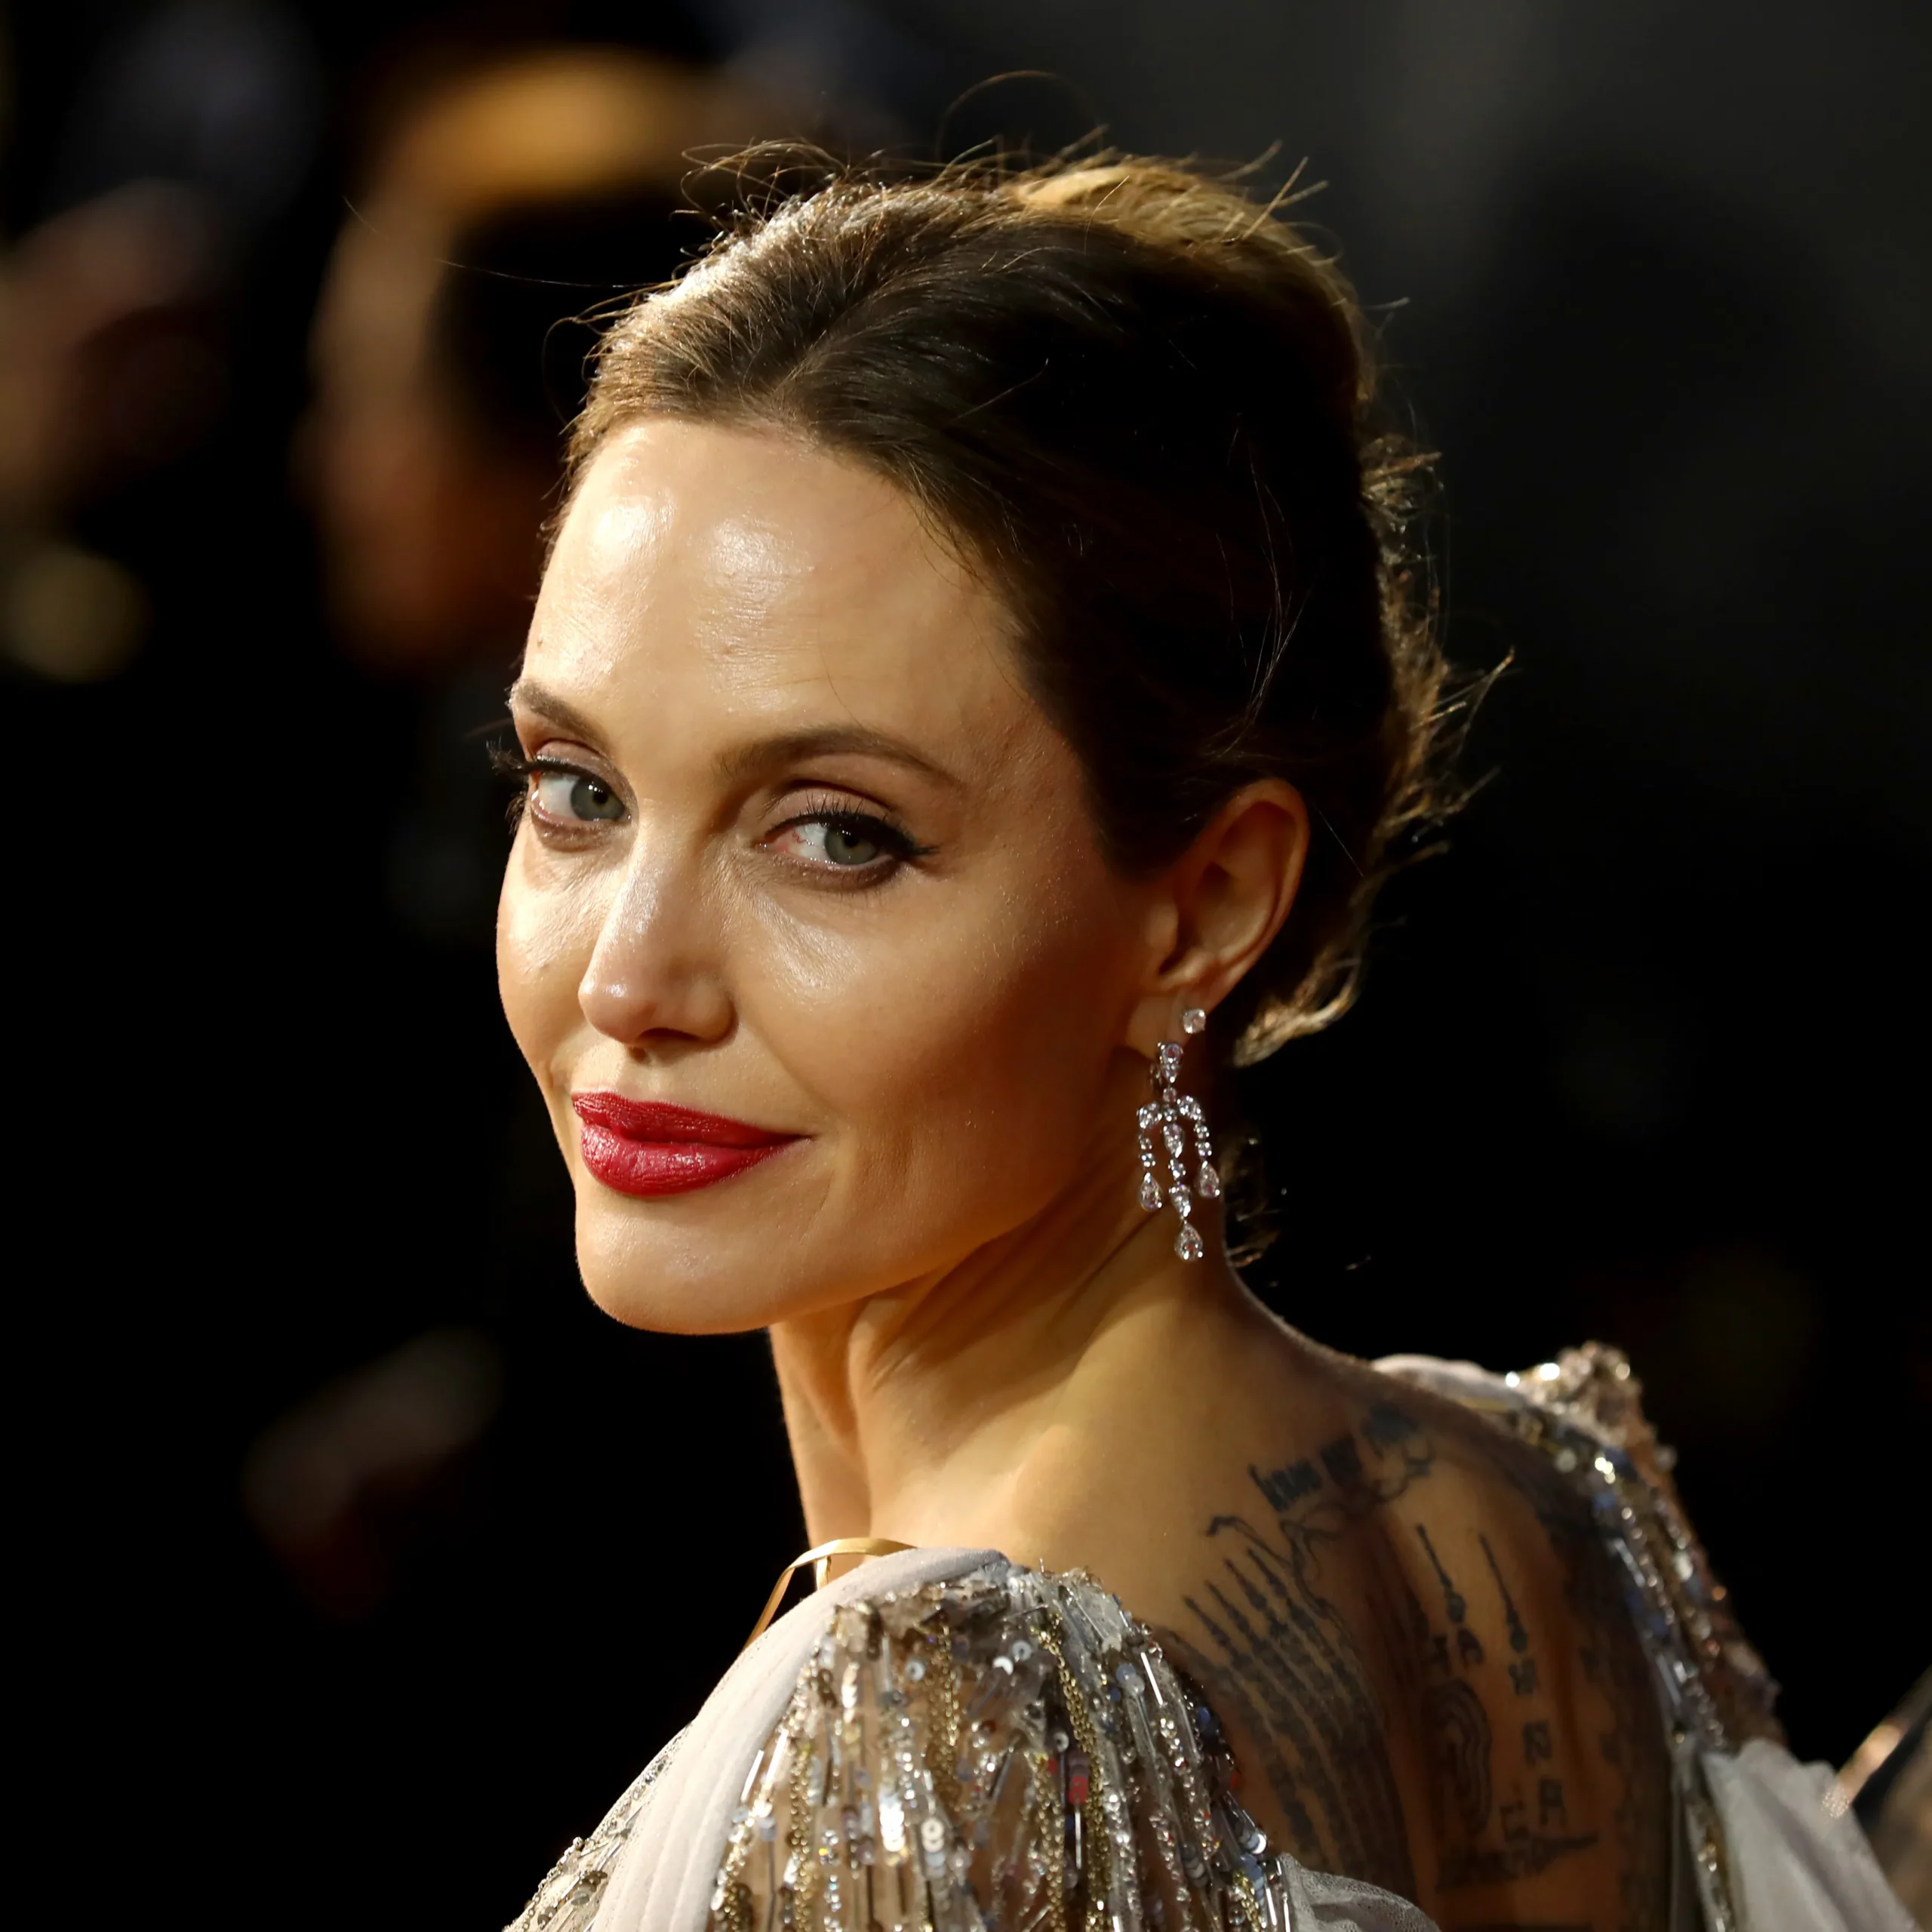 Israel-Palestine war divides Angelina Jolie from Hollywood